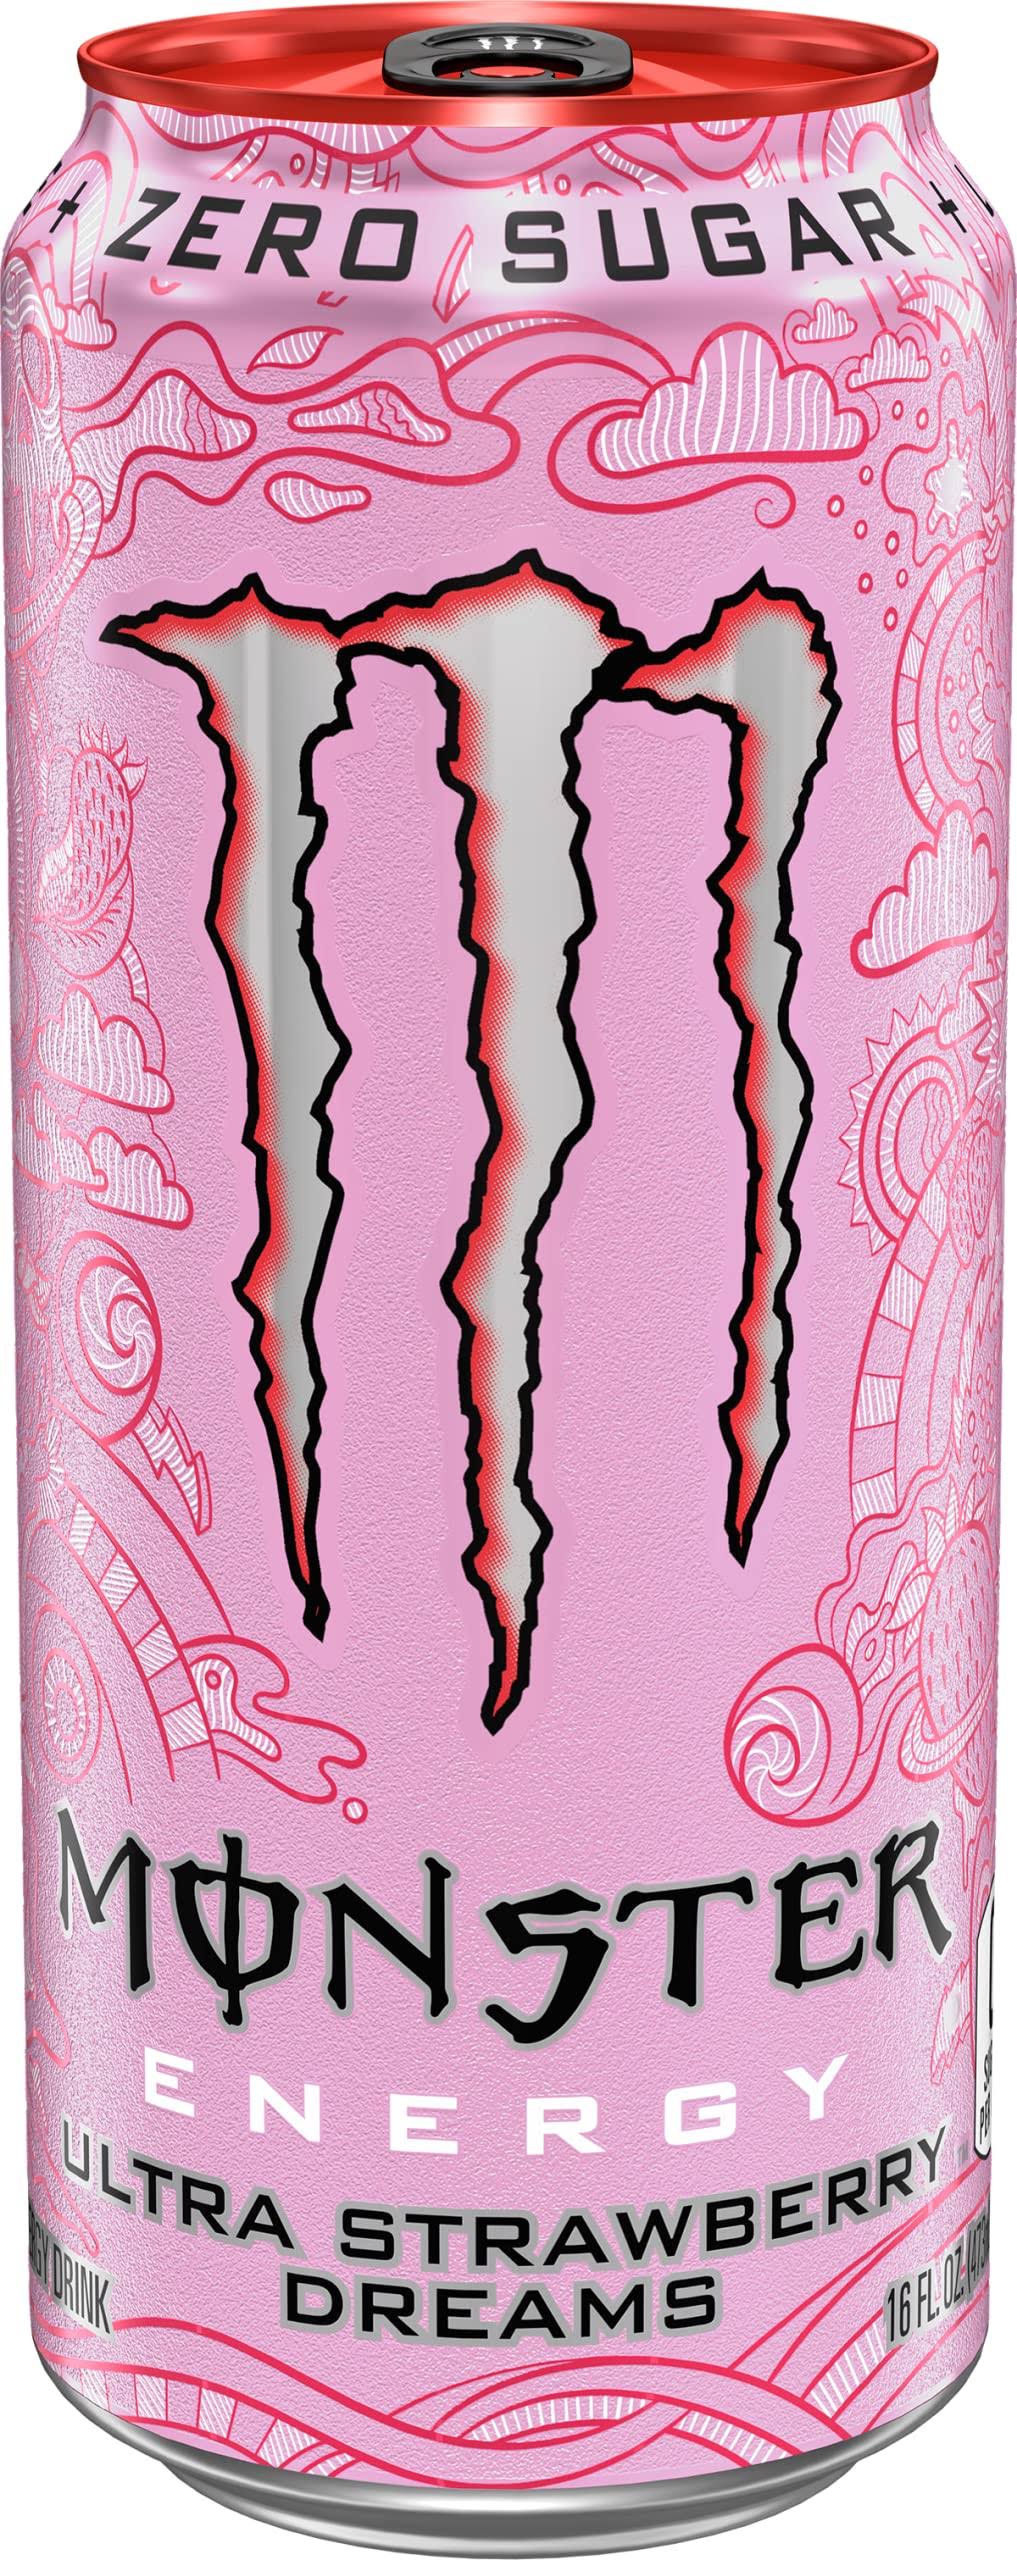 Monster Zero Sugar Ultra Strawberry Dreams Energy Drink (16 fl oz)